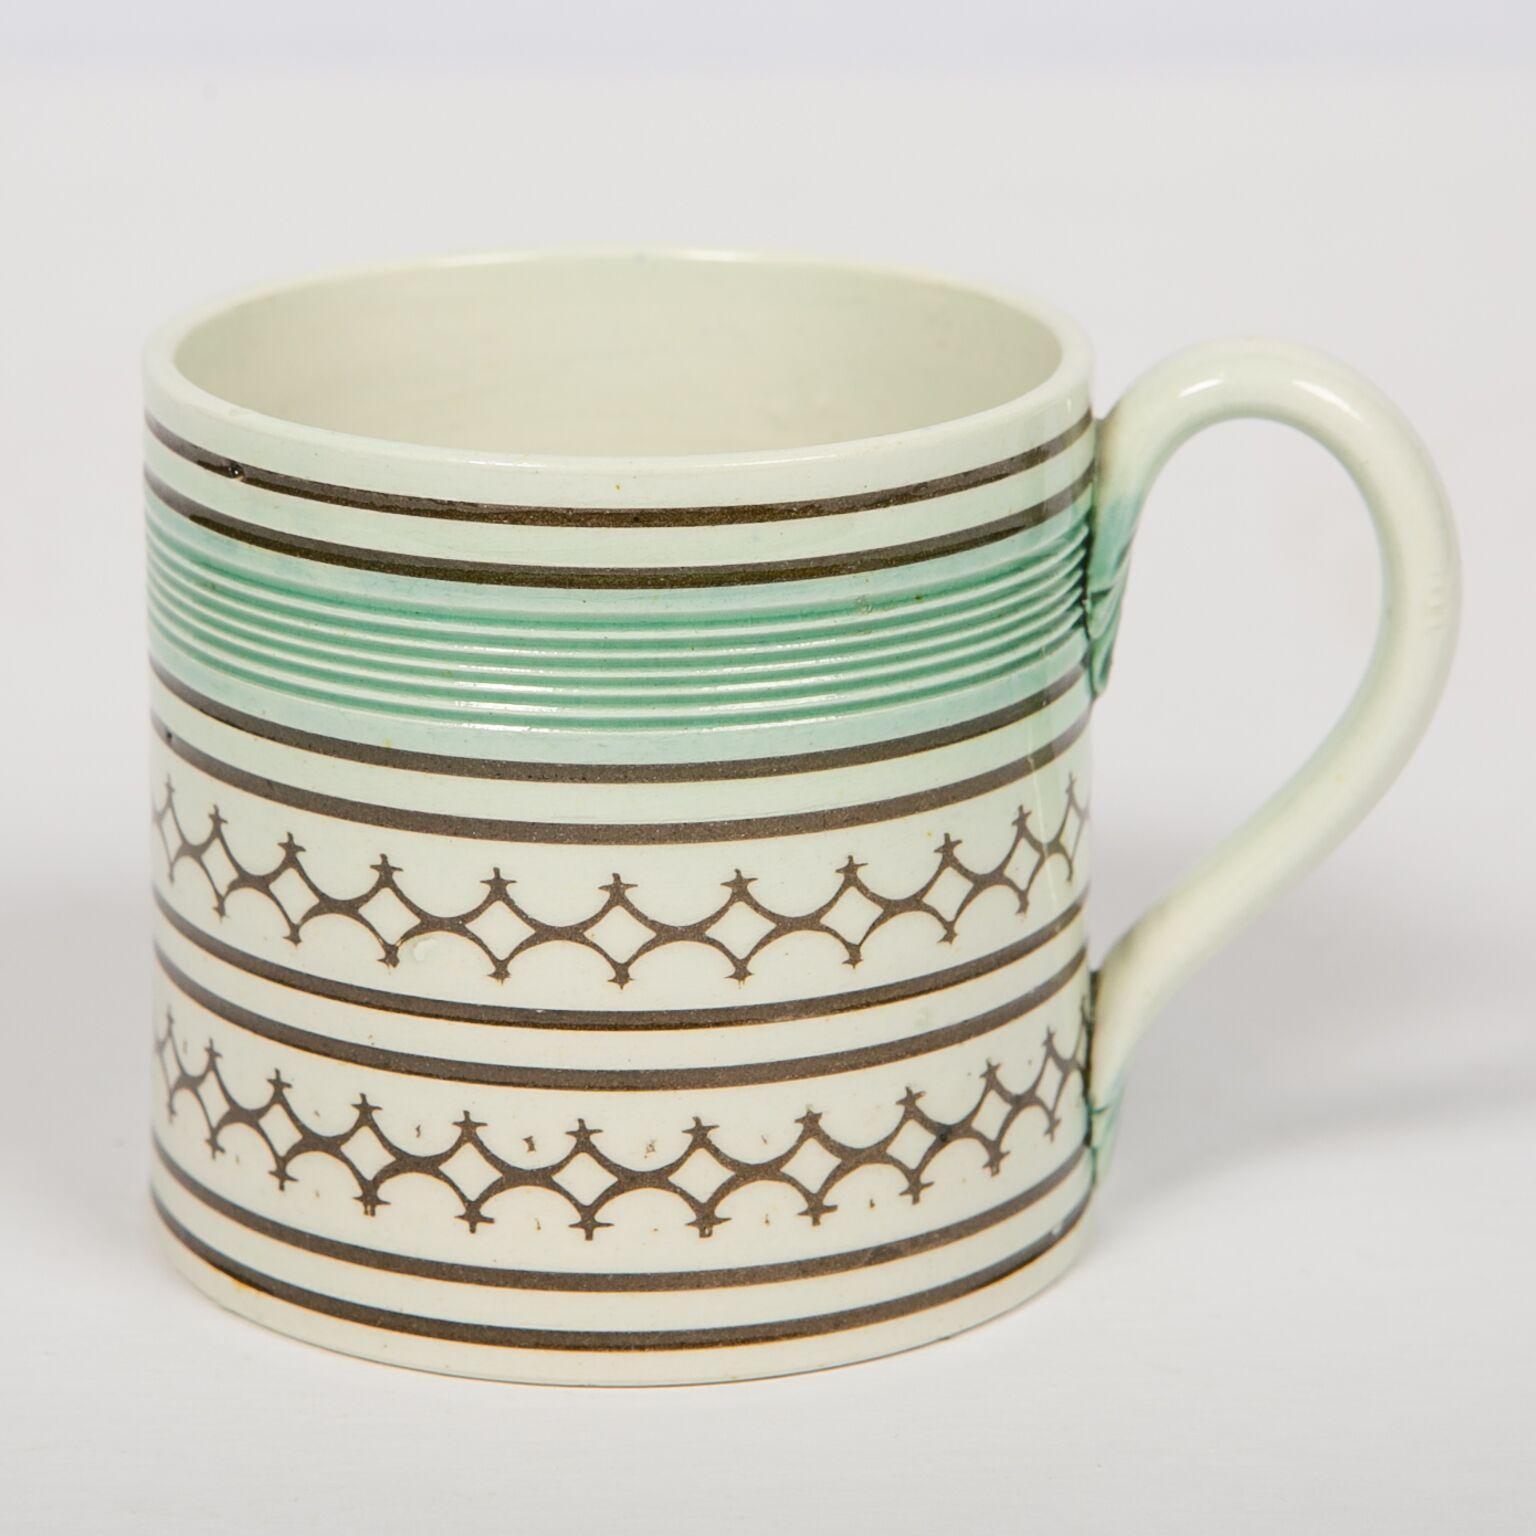 19th Century Small Mochaware Mug England, circa 1820